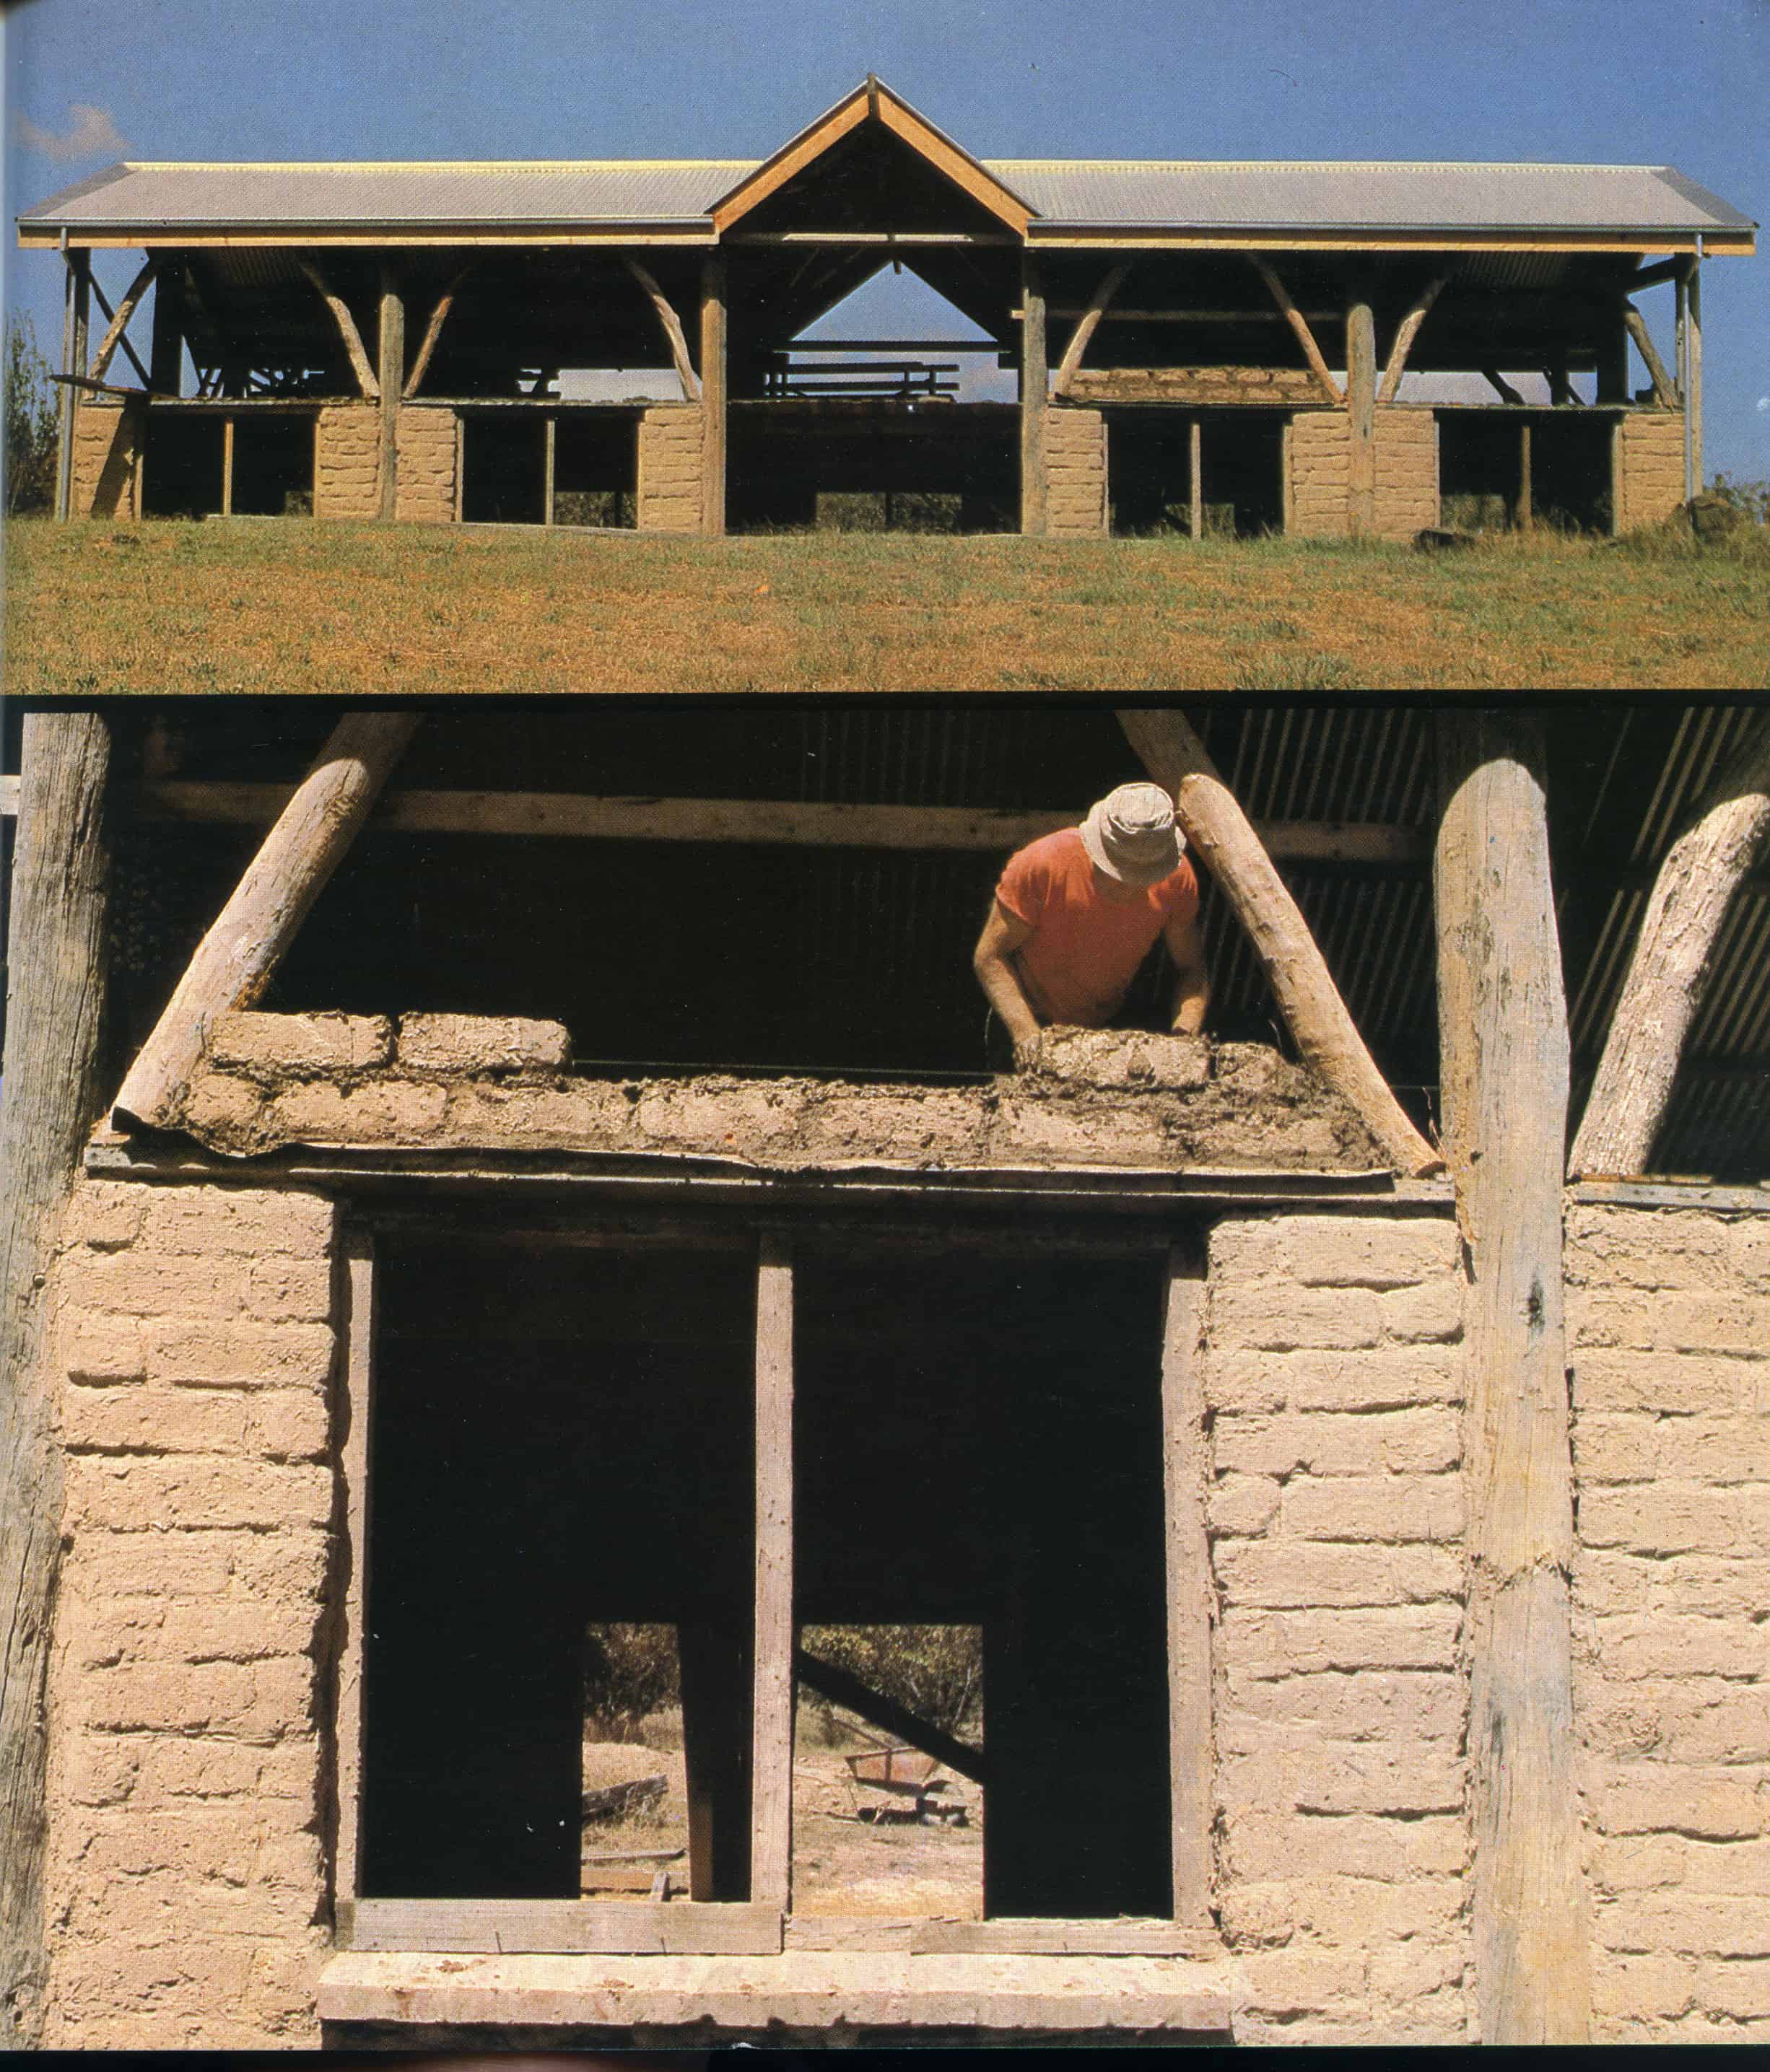 The Hugget barn